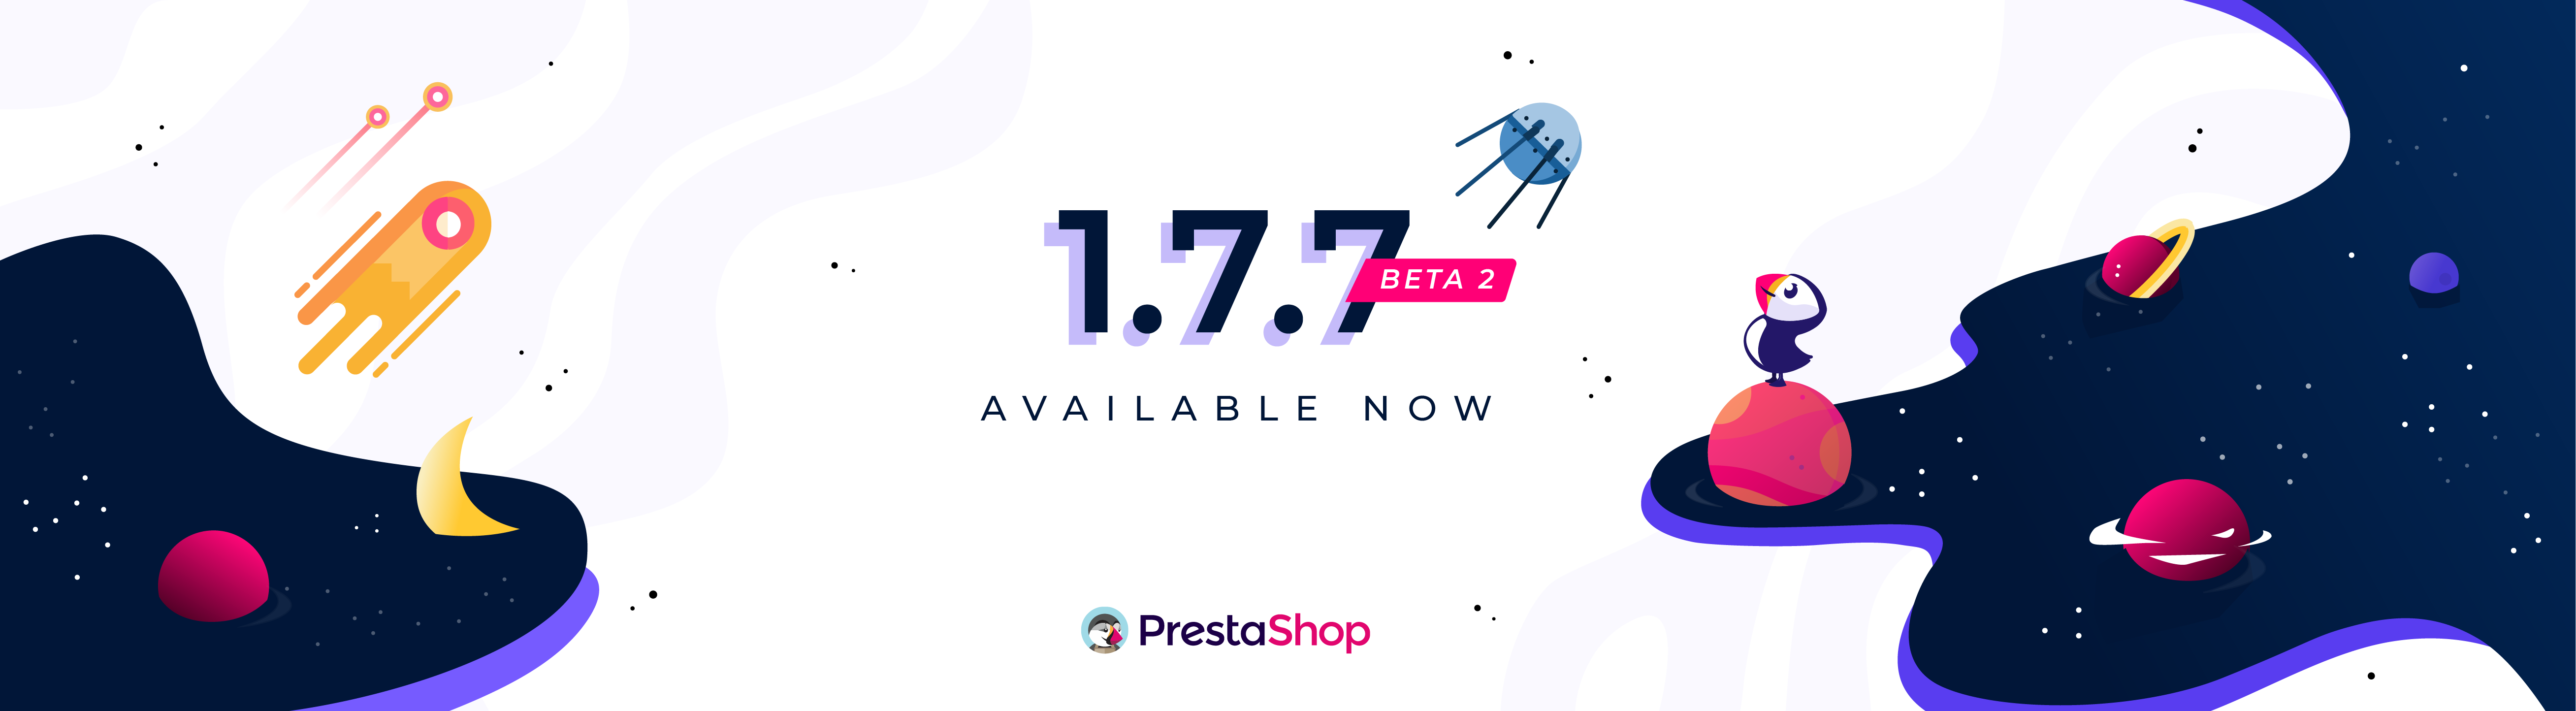 Prestashop 1.7.7.0 BETA 2 Release